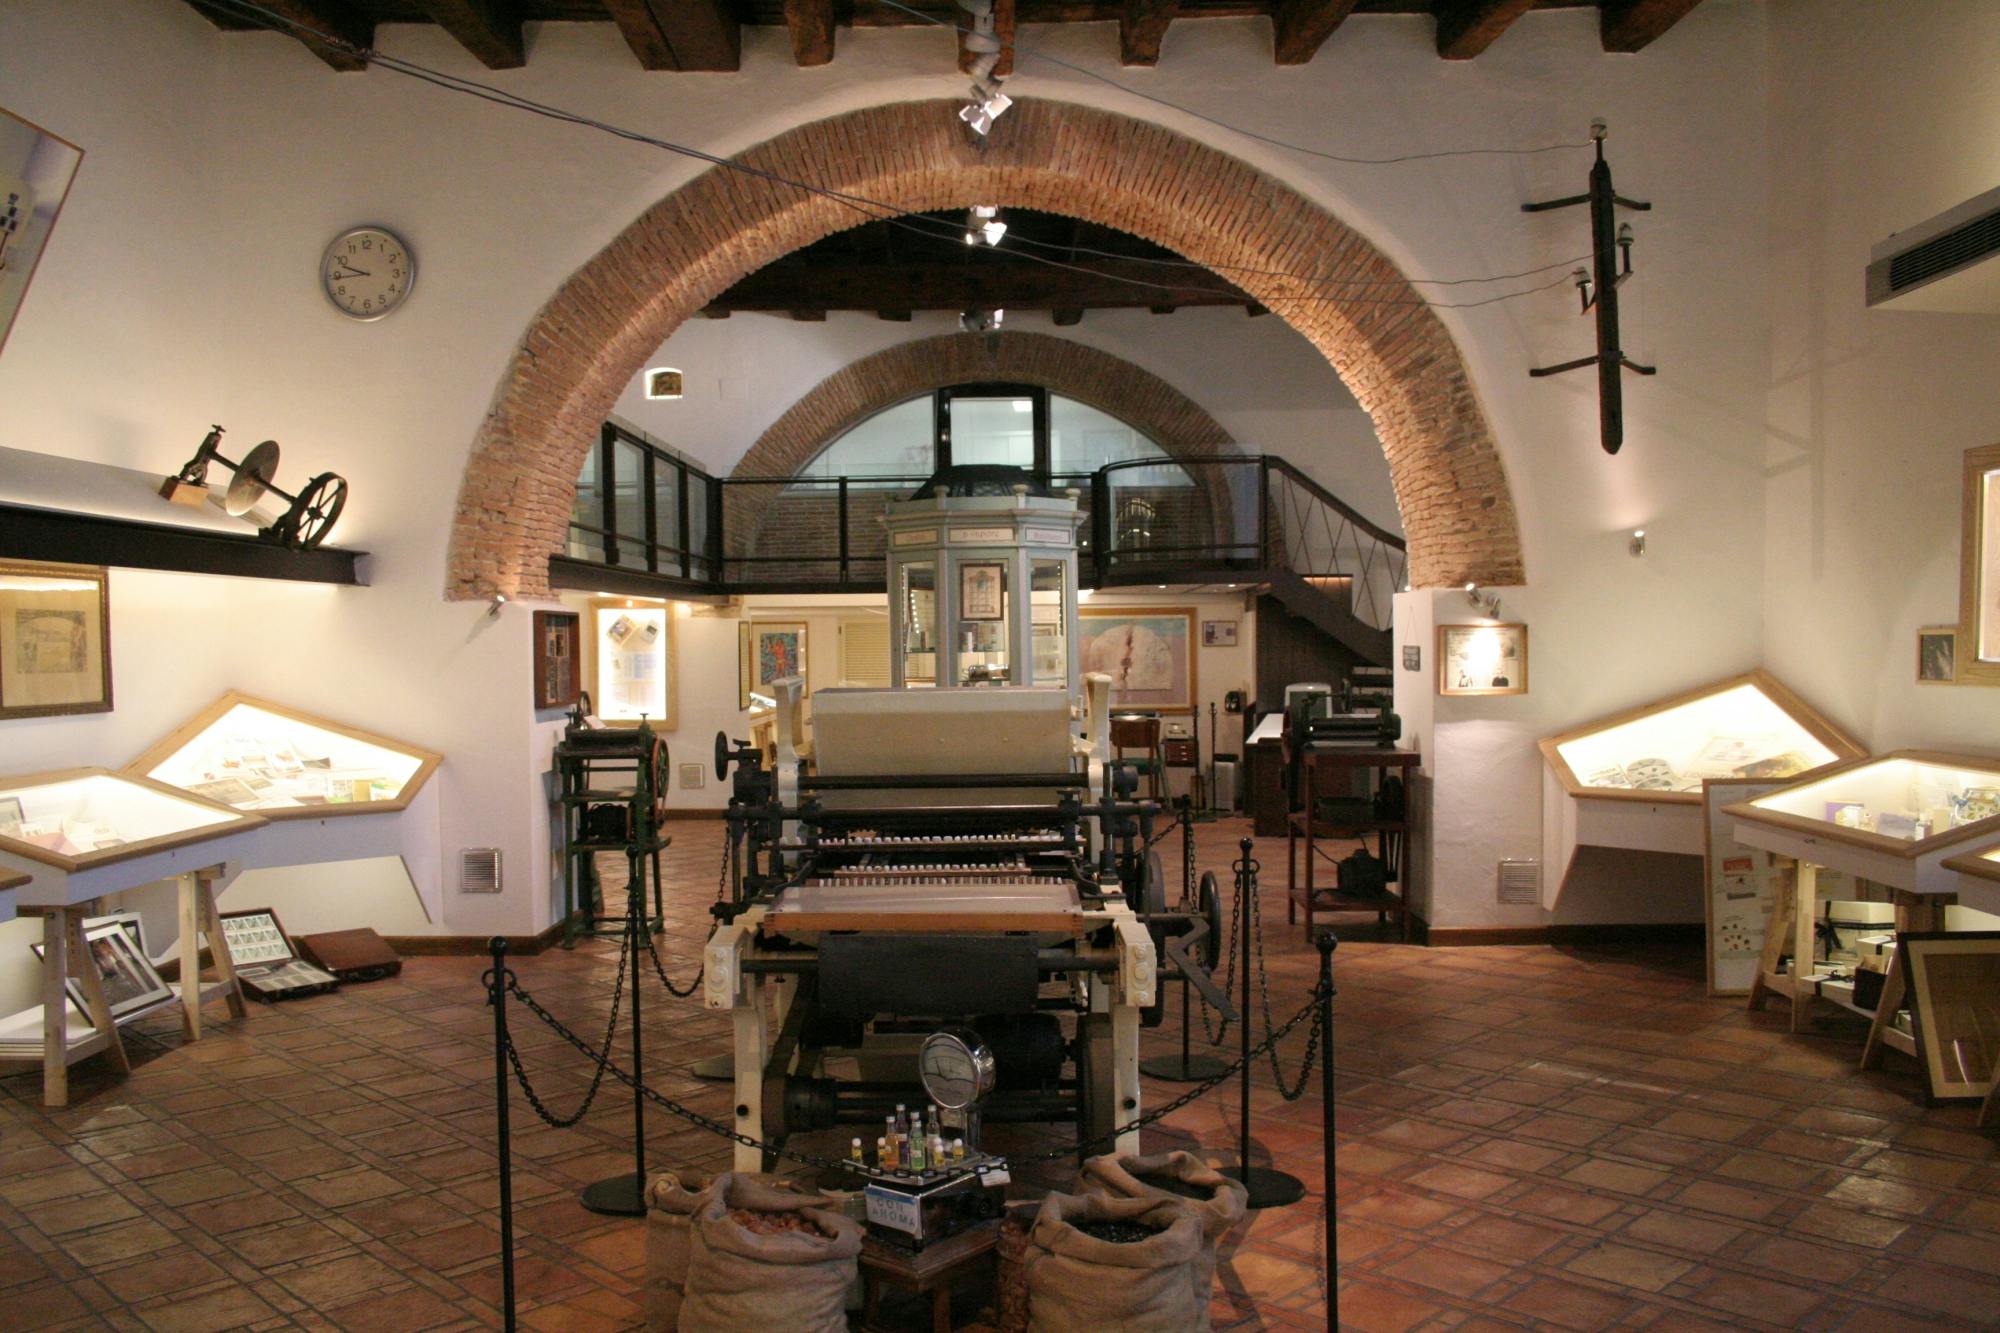 Guided tour of the licorice museum “Giorgio Amarelli” Musement